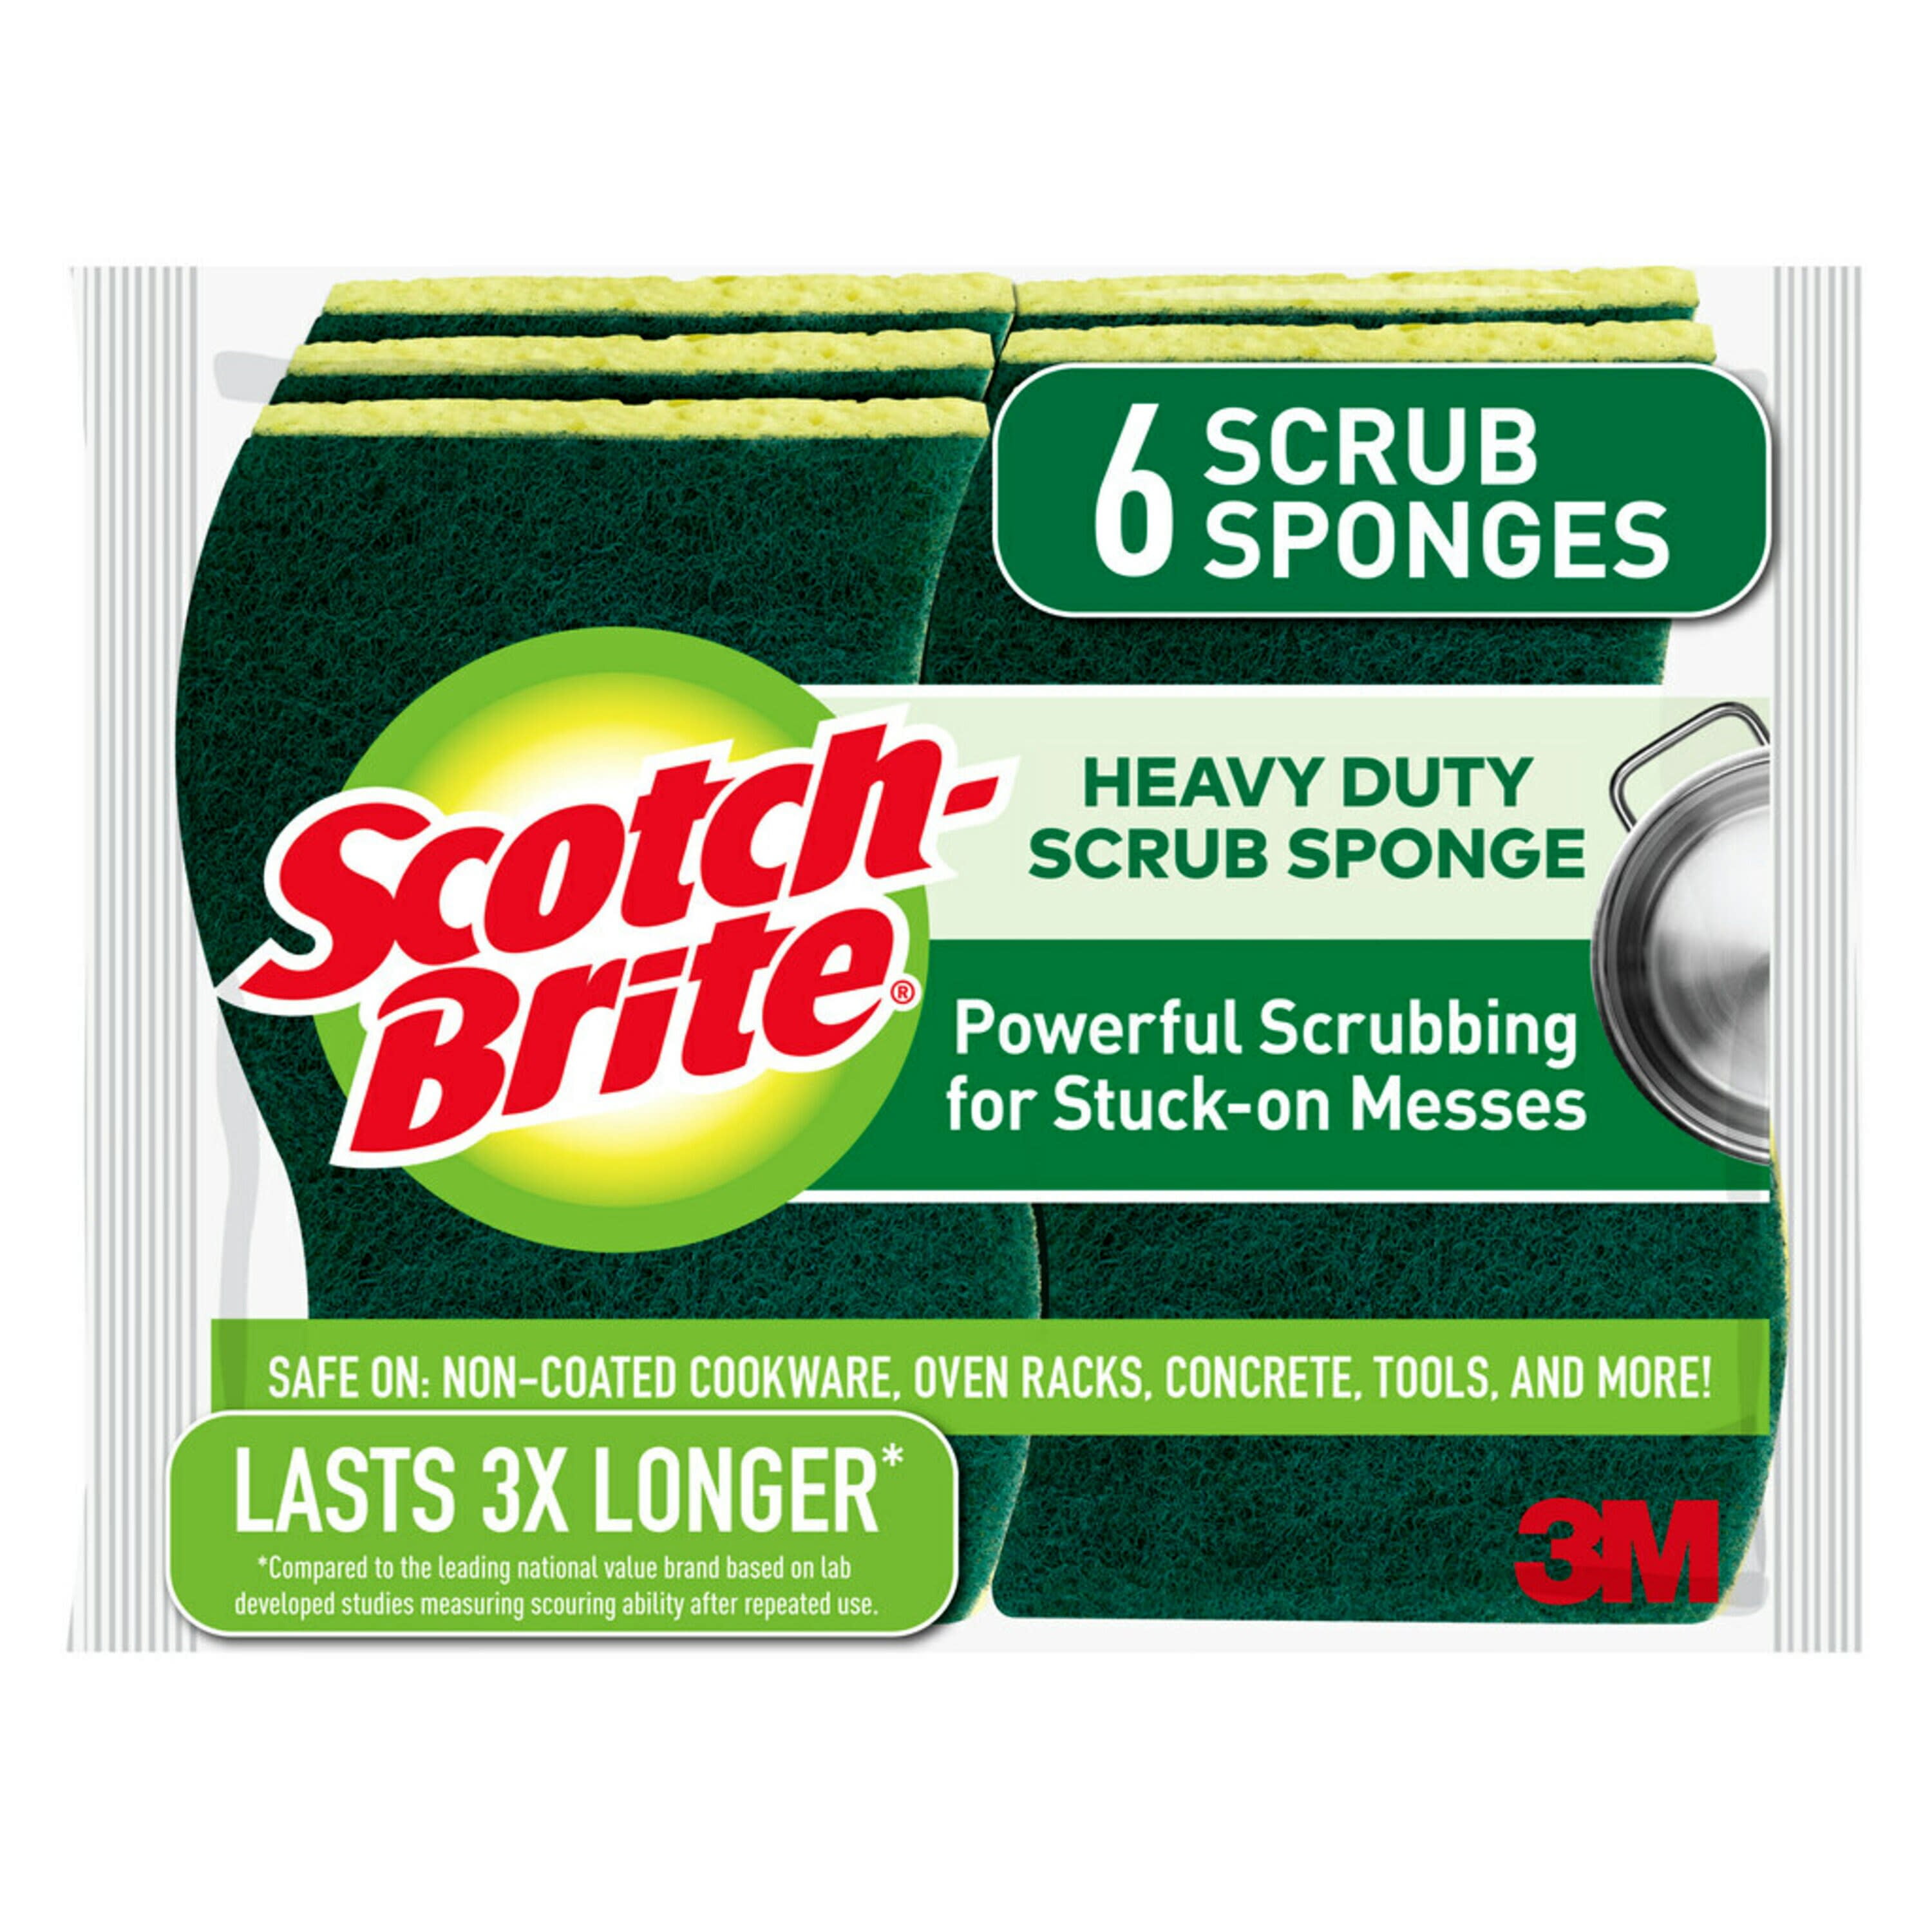 Scotch-Brite Heavy Duty Scrub Sponges, 6 Scrubbing Sponges